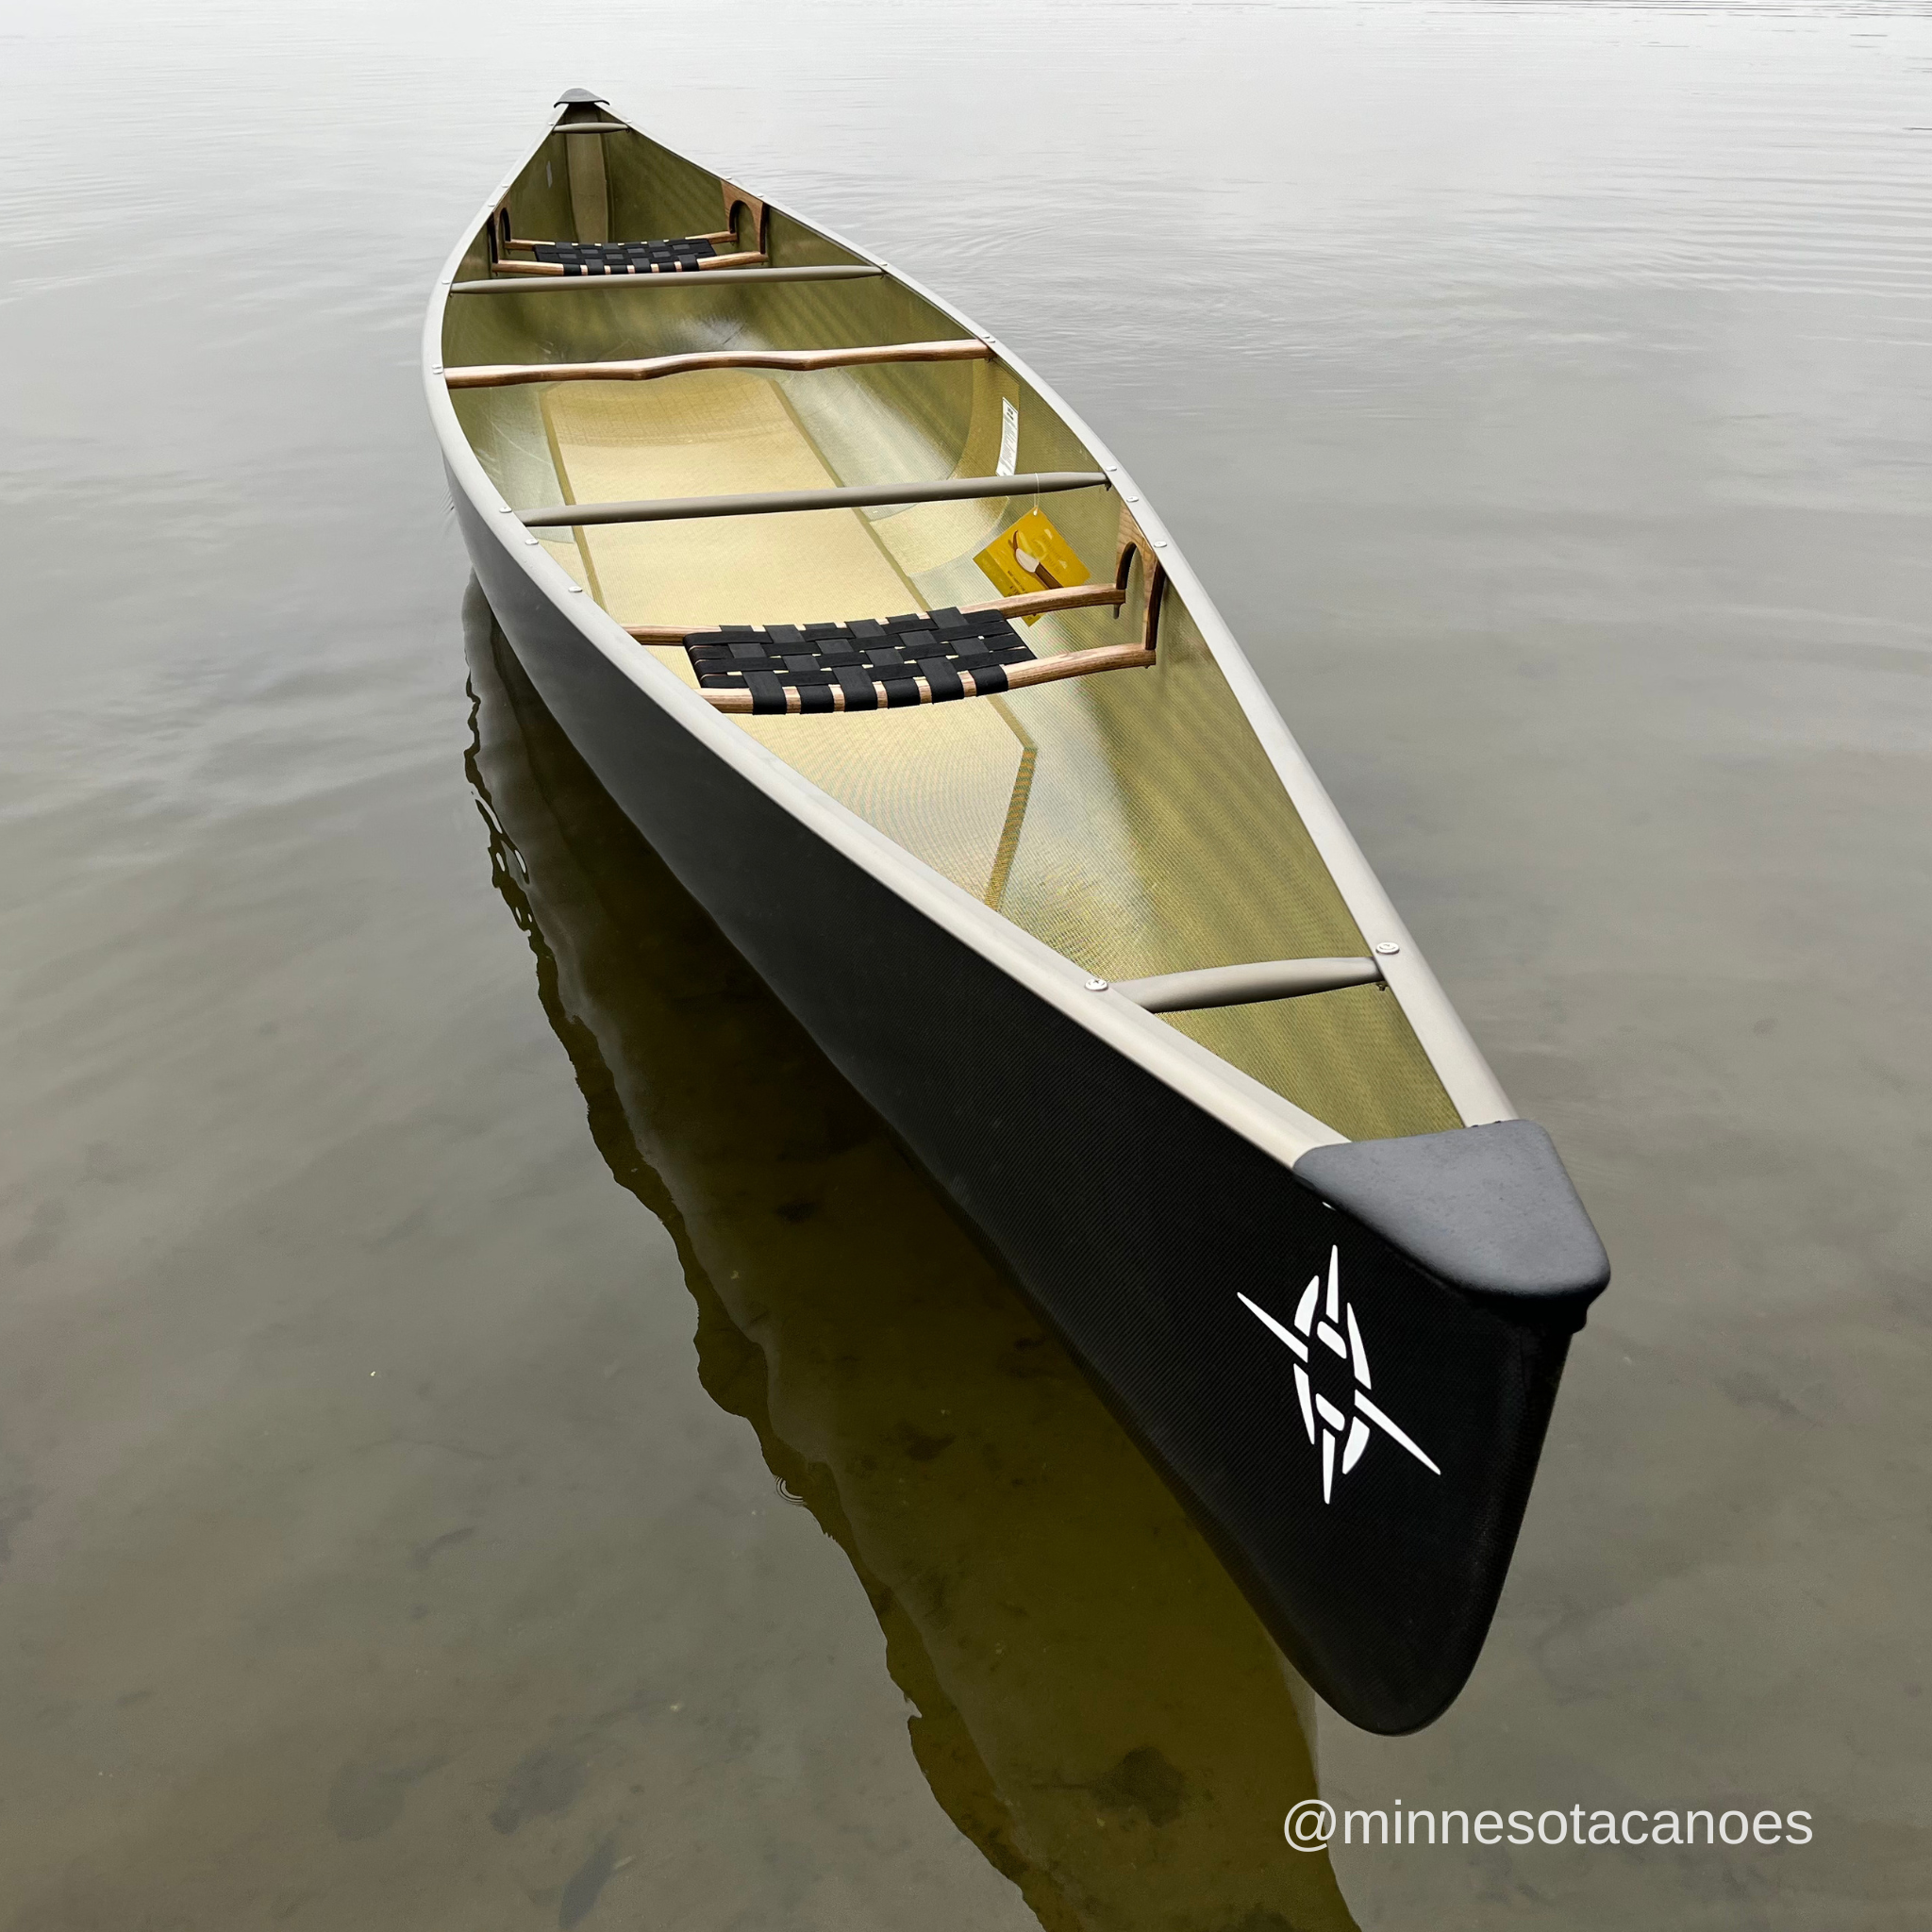 NORTHWIND 17 (17' 6") BlackLite Tandem Northstar Canoe